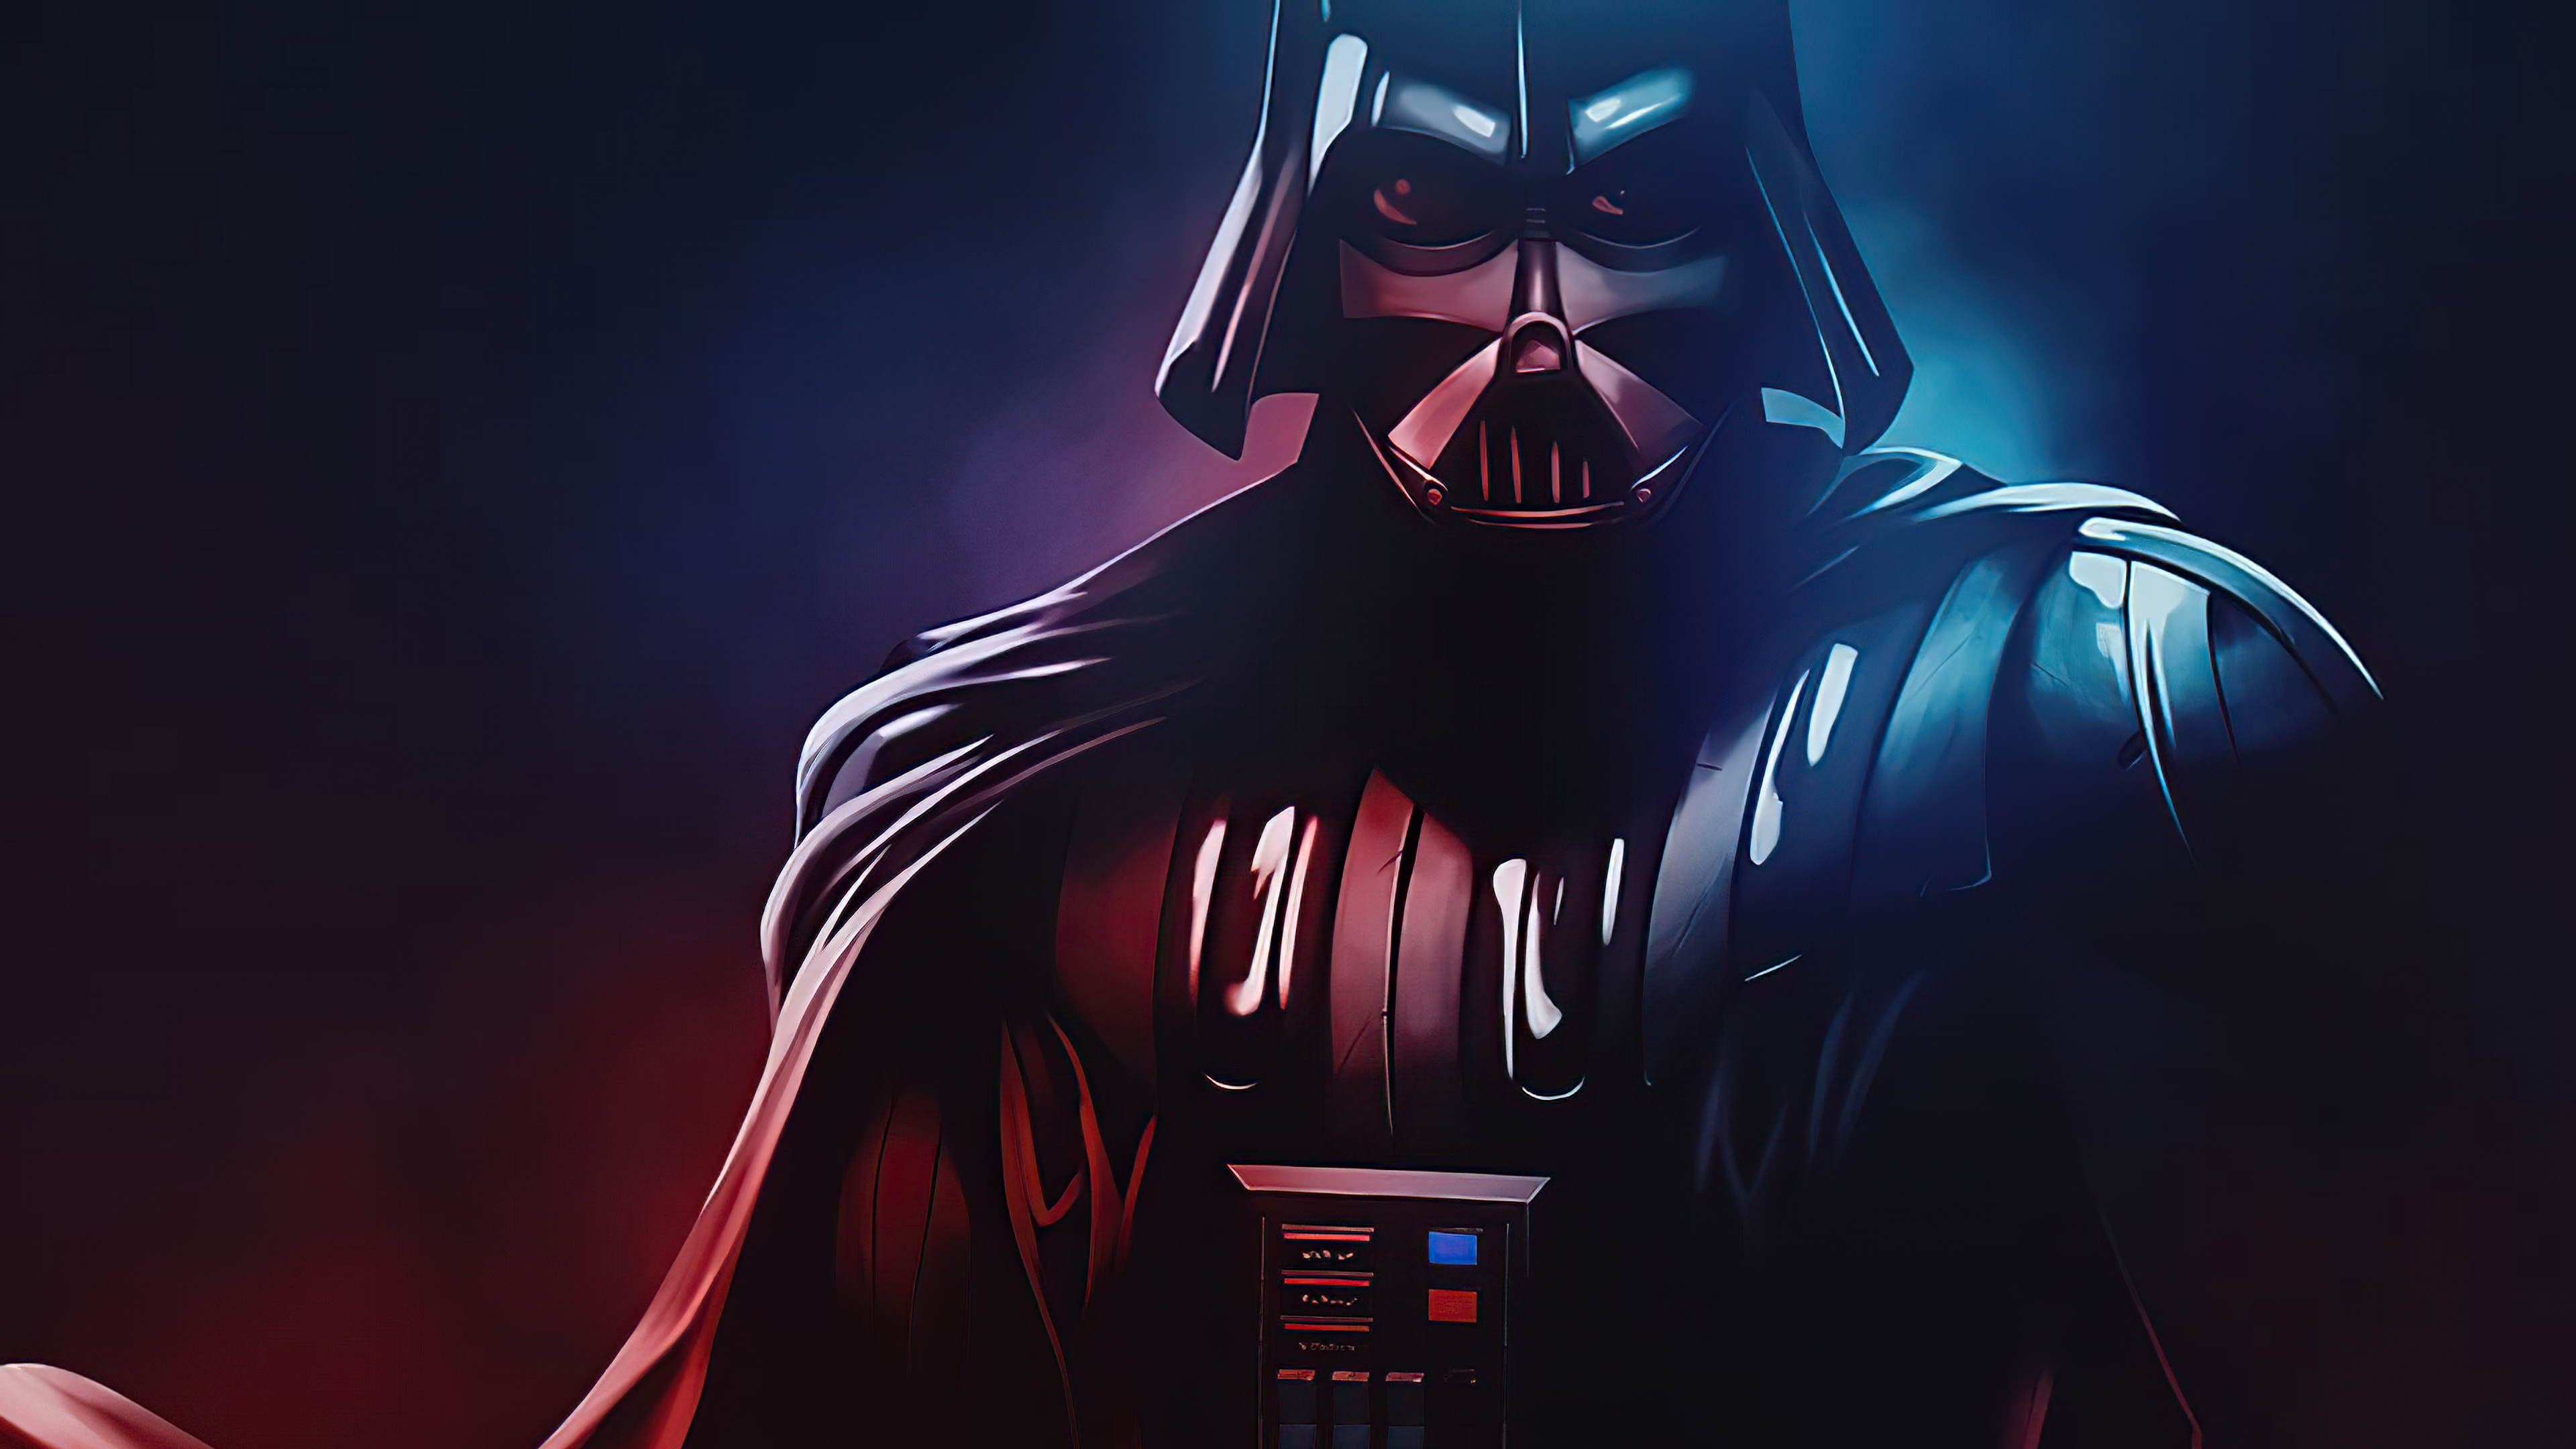 Darth Vader HD Wallpapers Free download  PixelsTalkNet